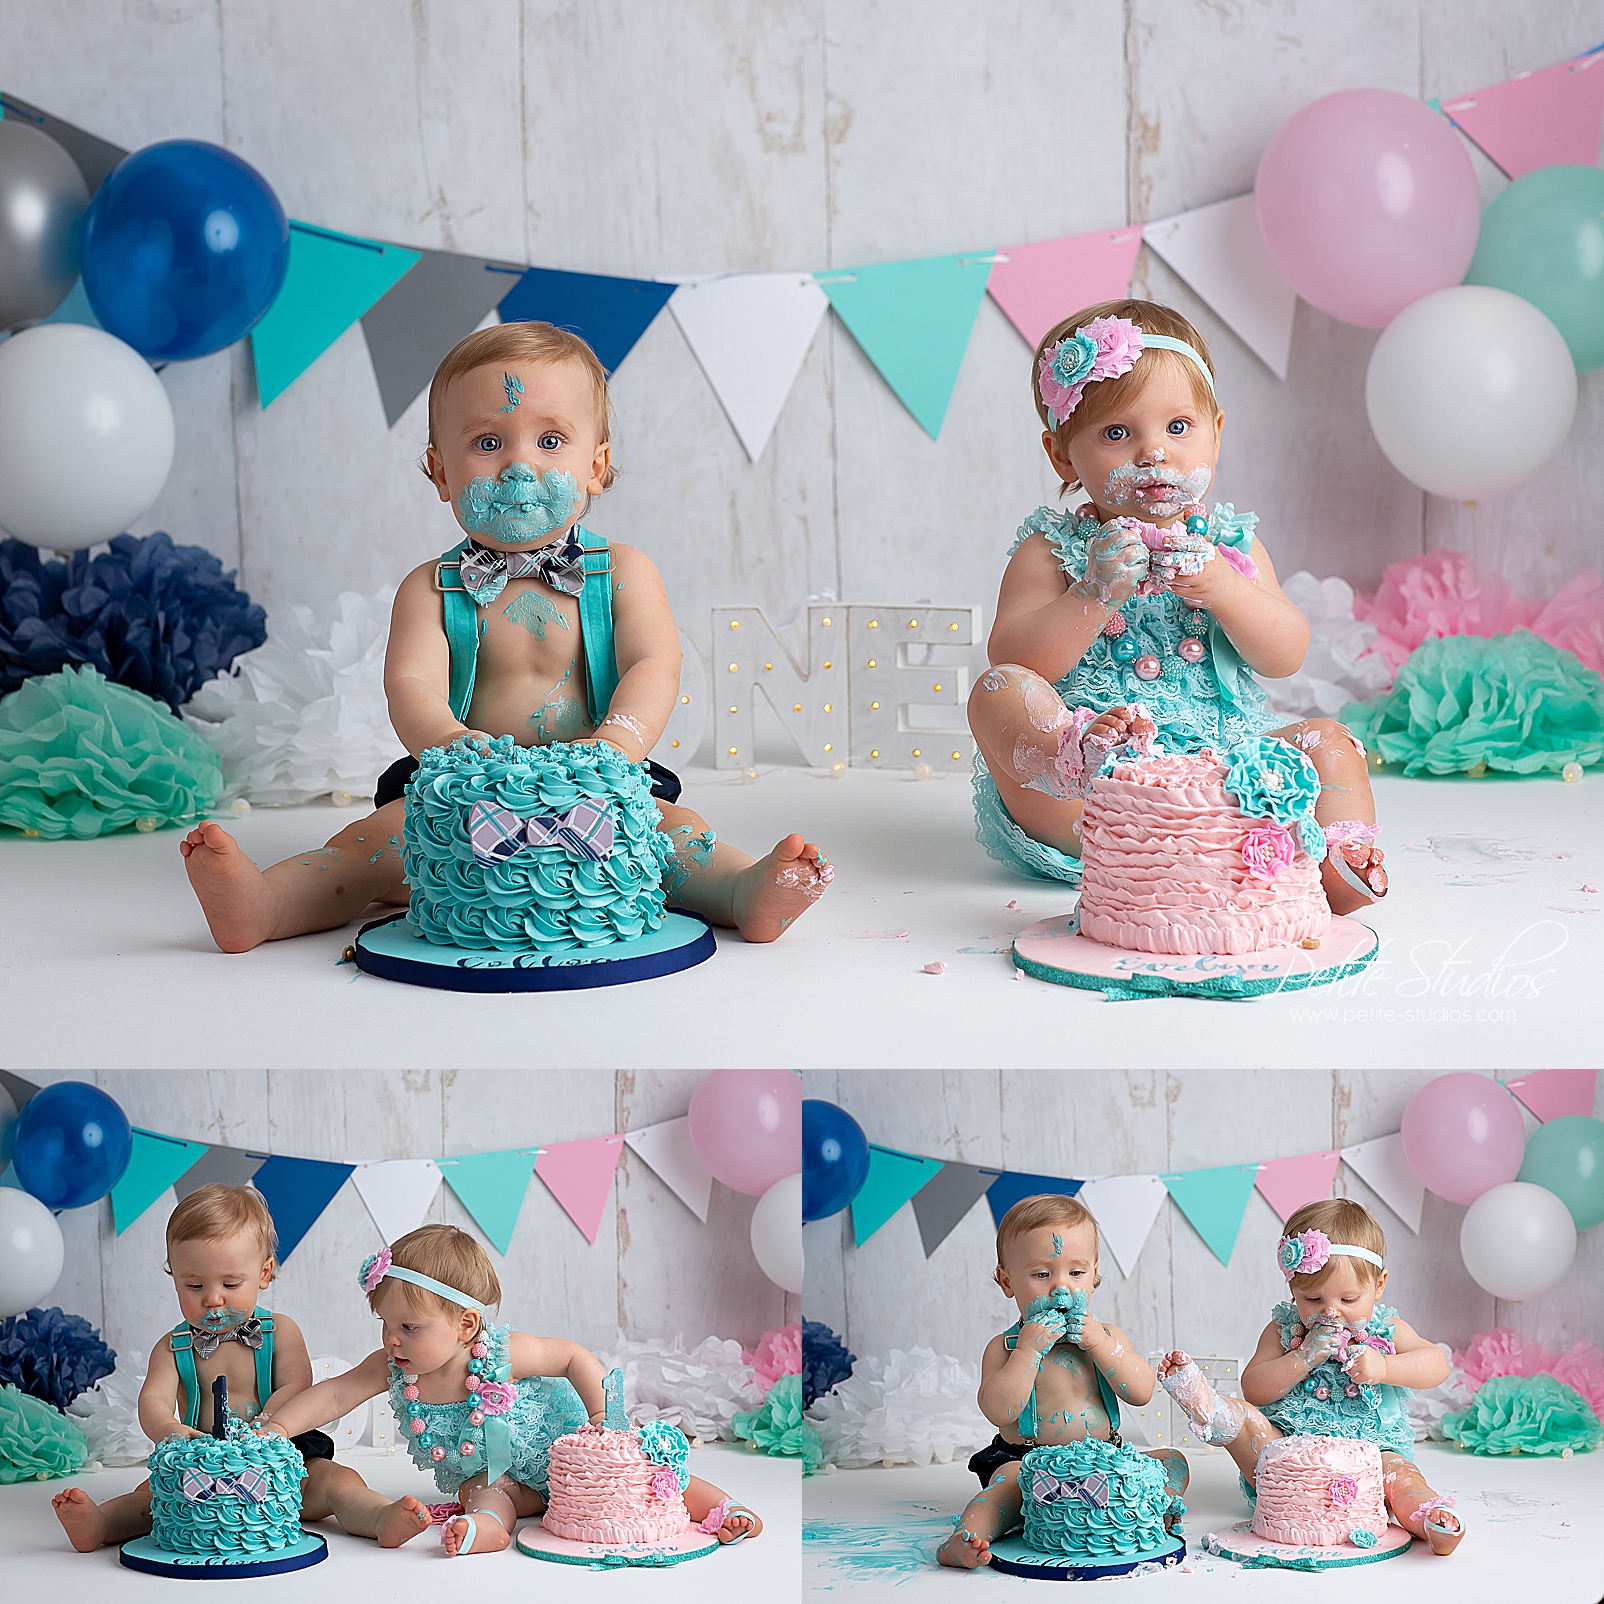 Twin Brothers Cake | Twin birthday cakes, Birthday cake decorating, Cake